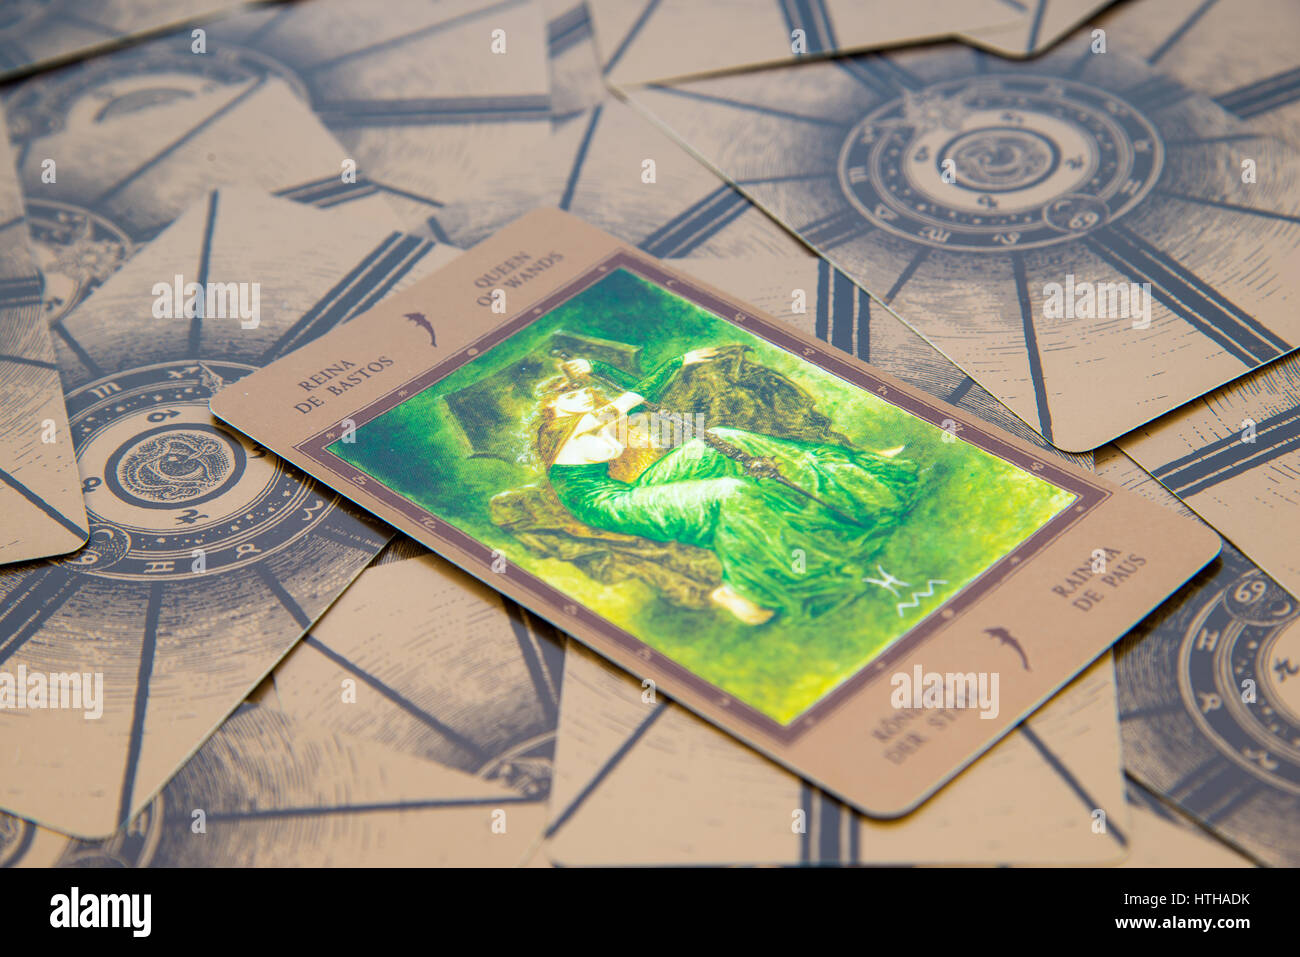 Moscow, Russia - January 29, 2017: Tarot card Qeen of Wands. Labirinth tarot deck. Esoteric background Stock Photo